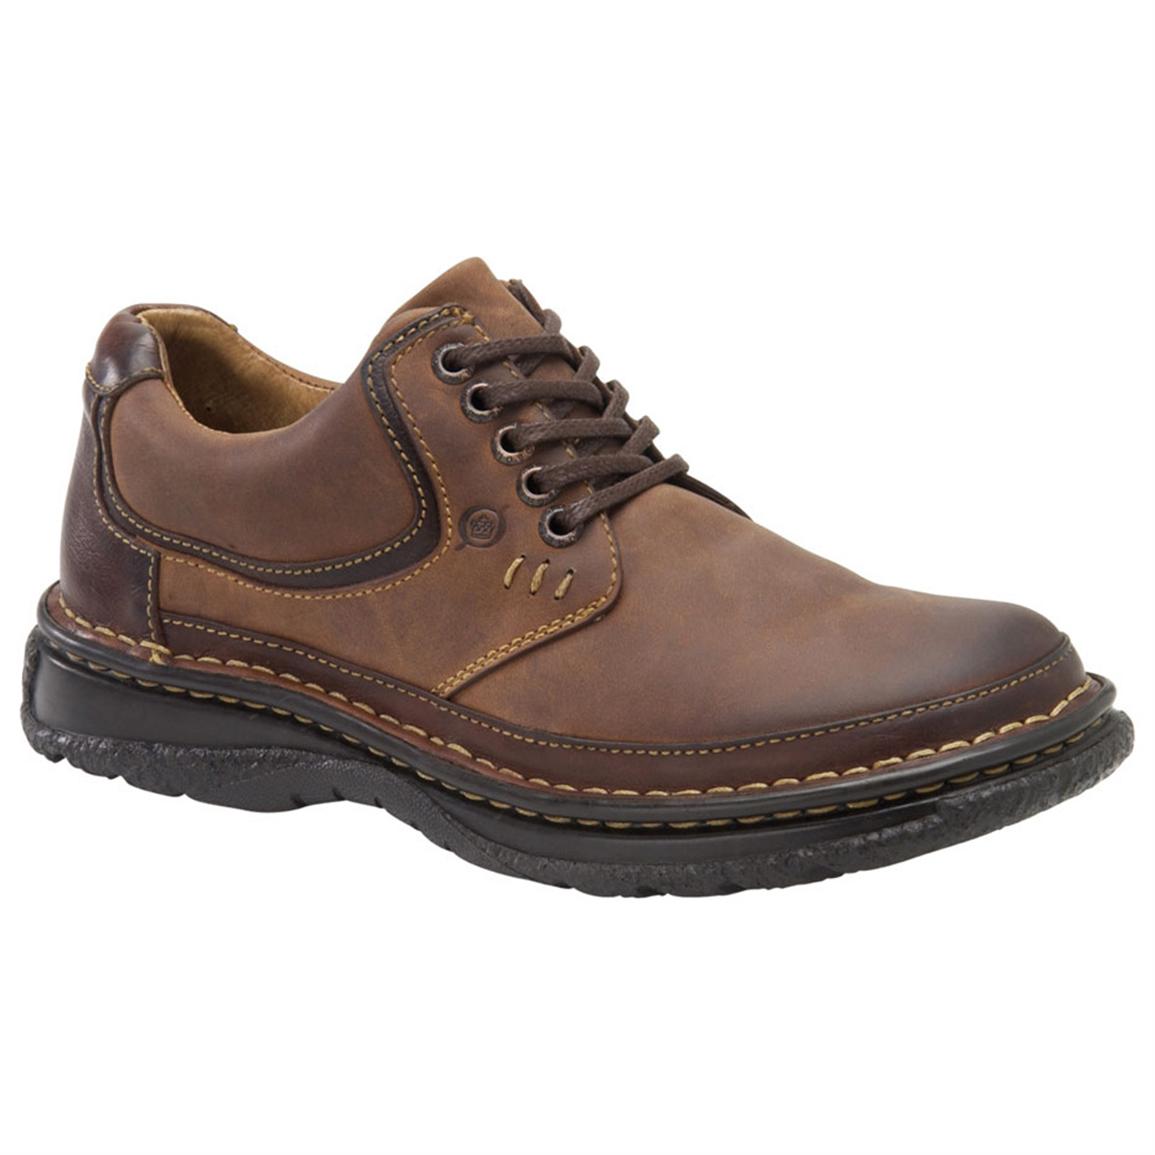 Men's Born® Toledo Shoes - 148005, Casual Shoes at Sportsman's Guide